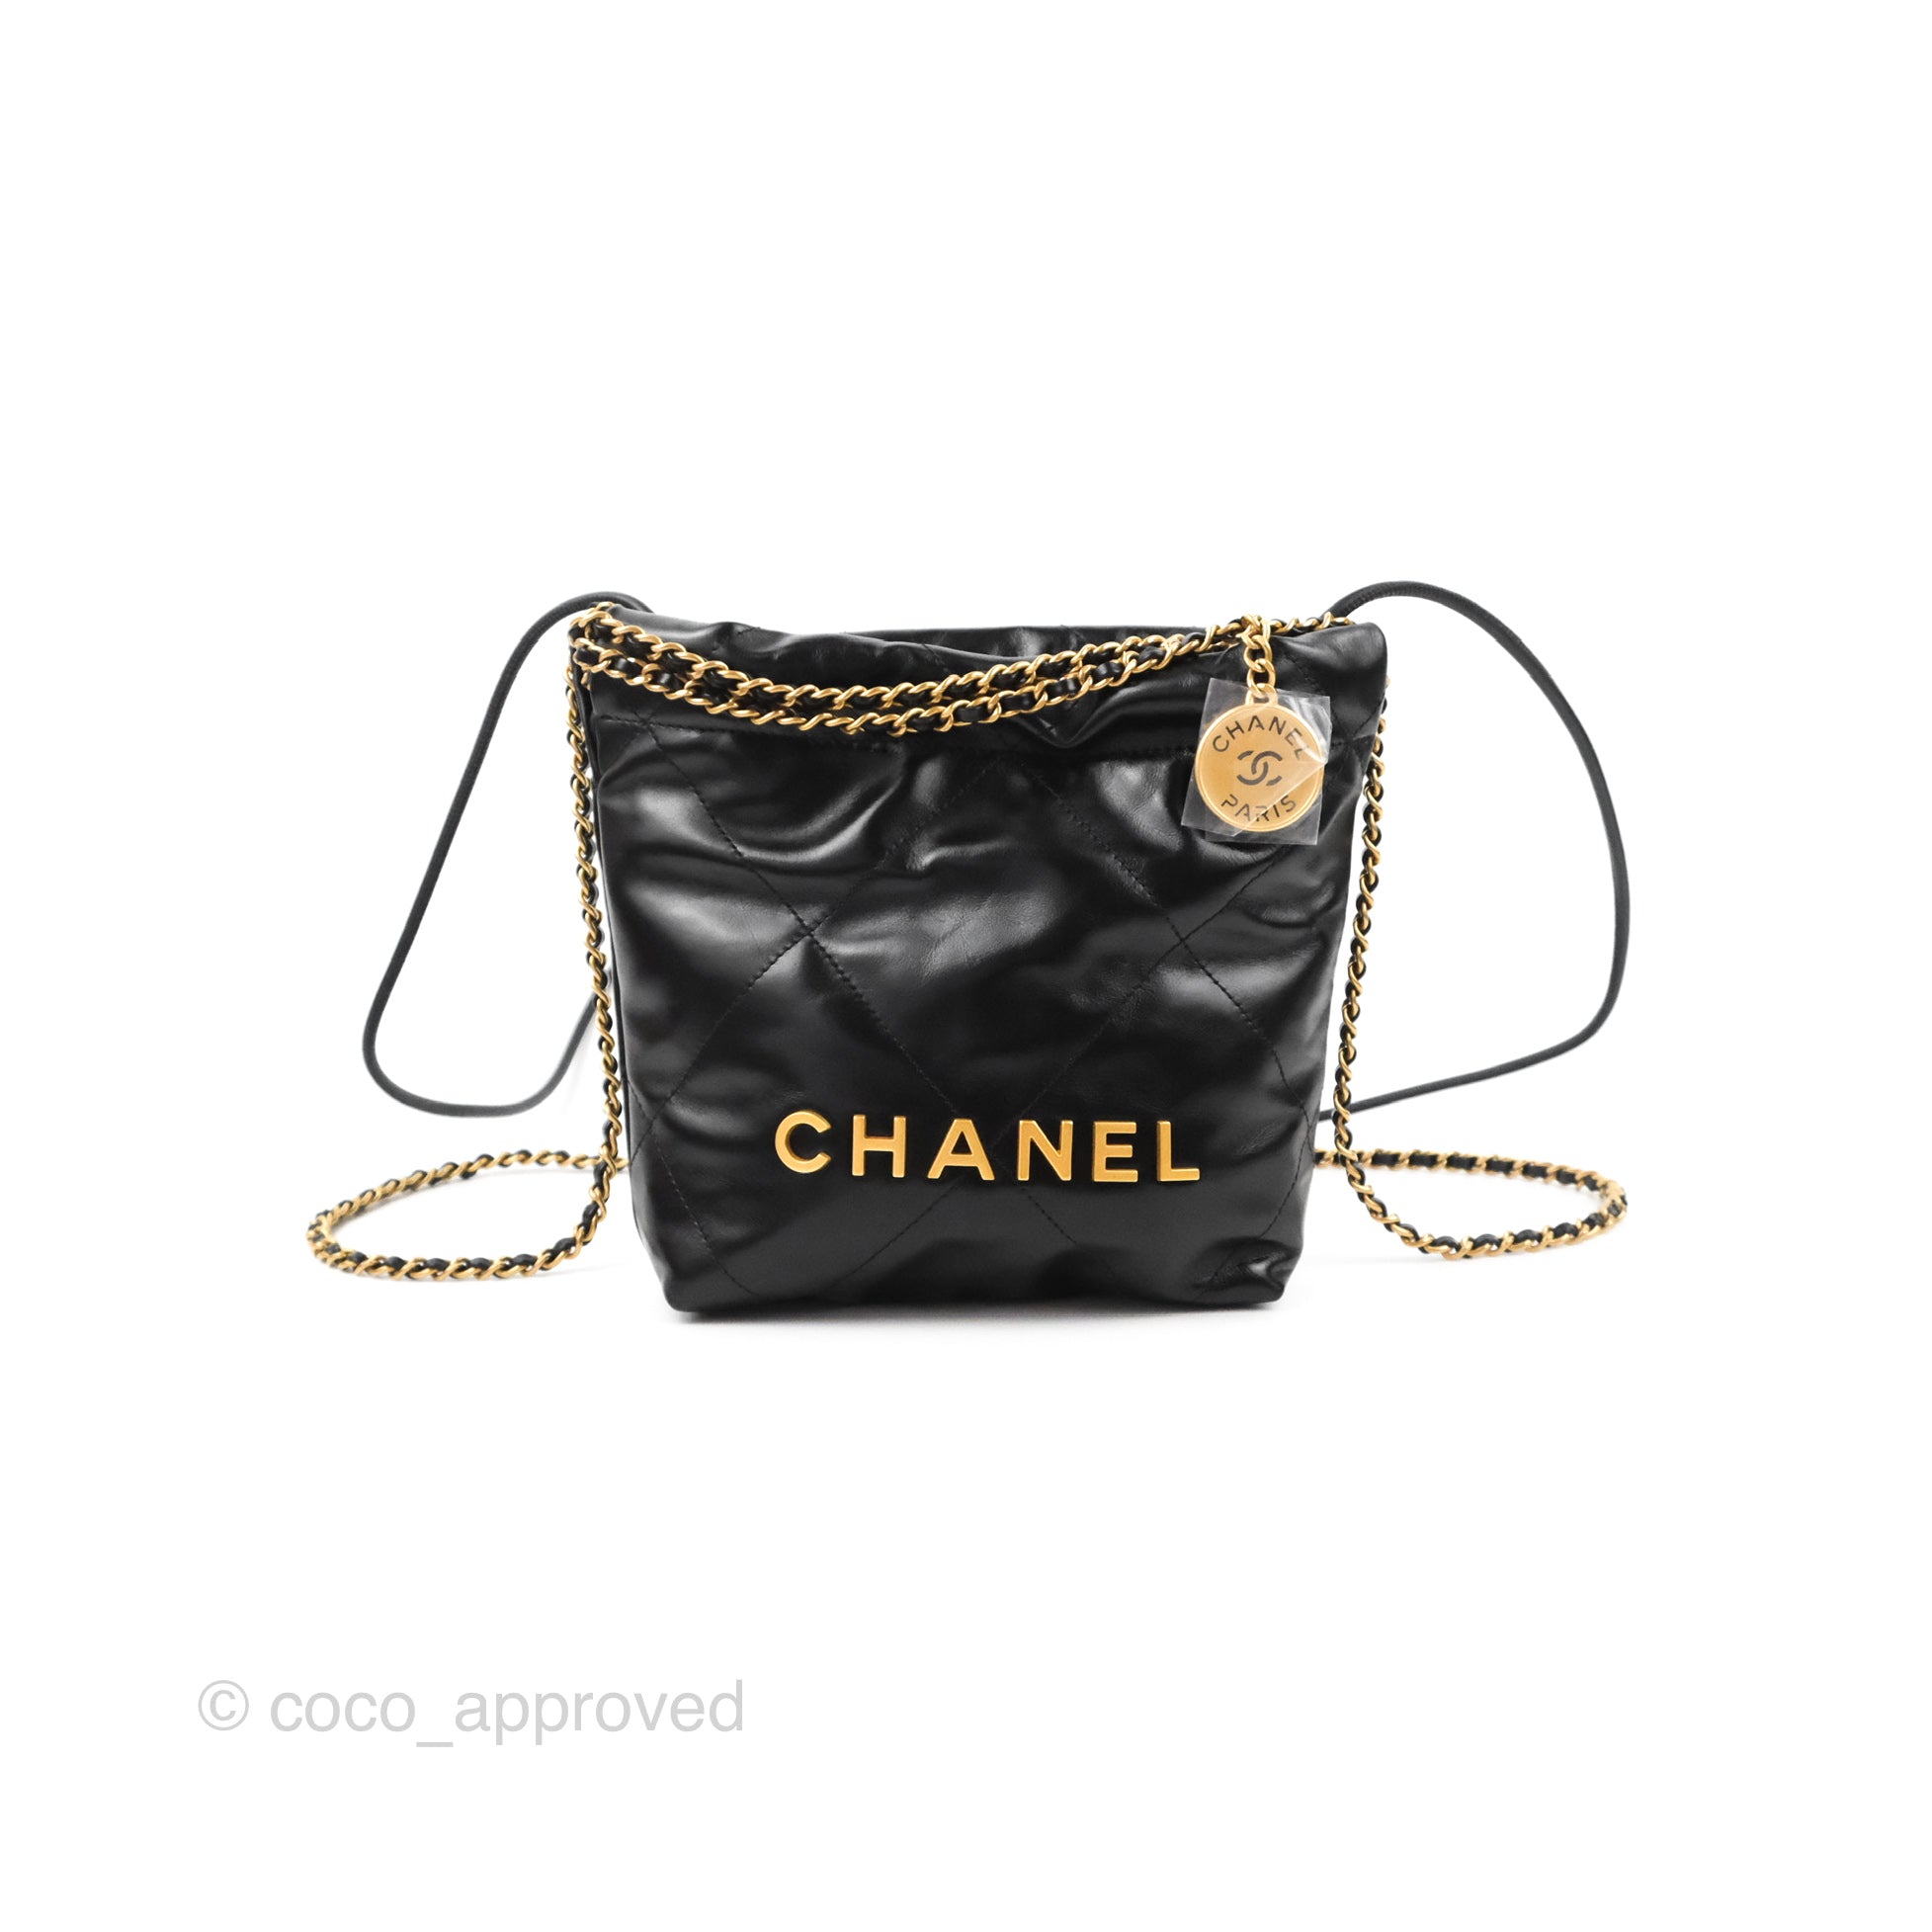 CHANEL Mini Bags & Handbags for Women, Authenticity Guaranteed